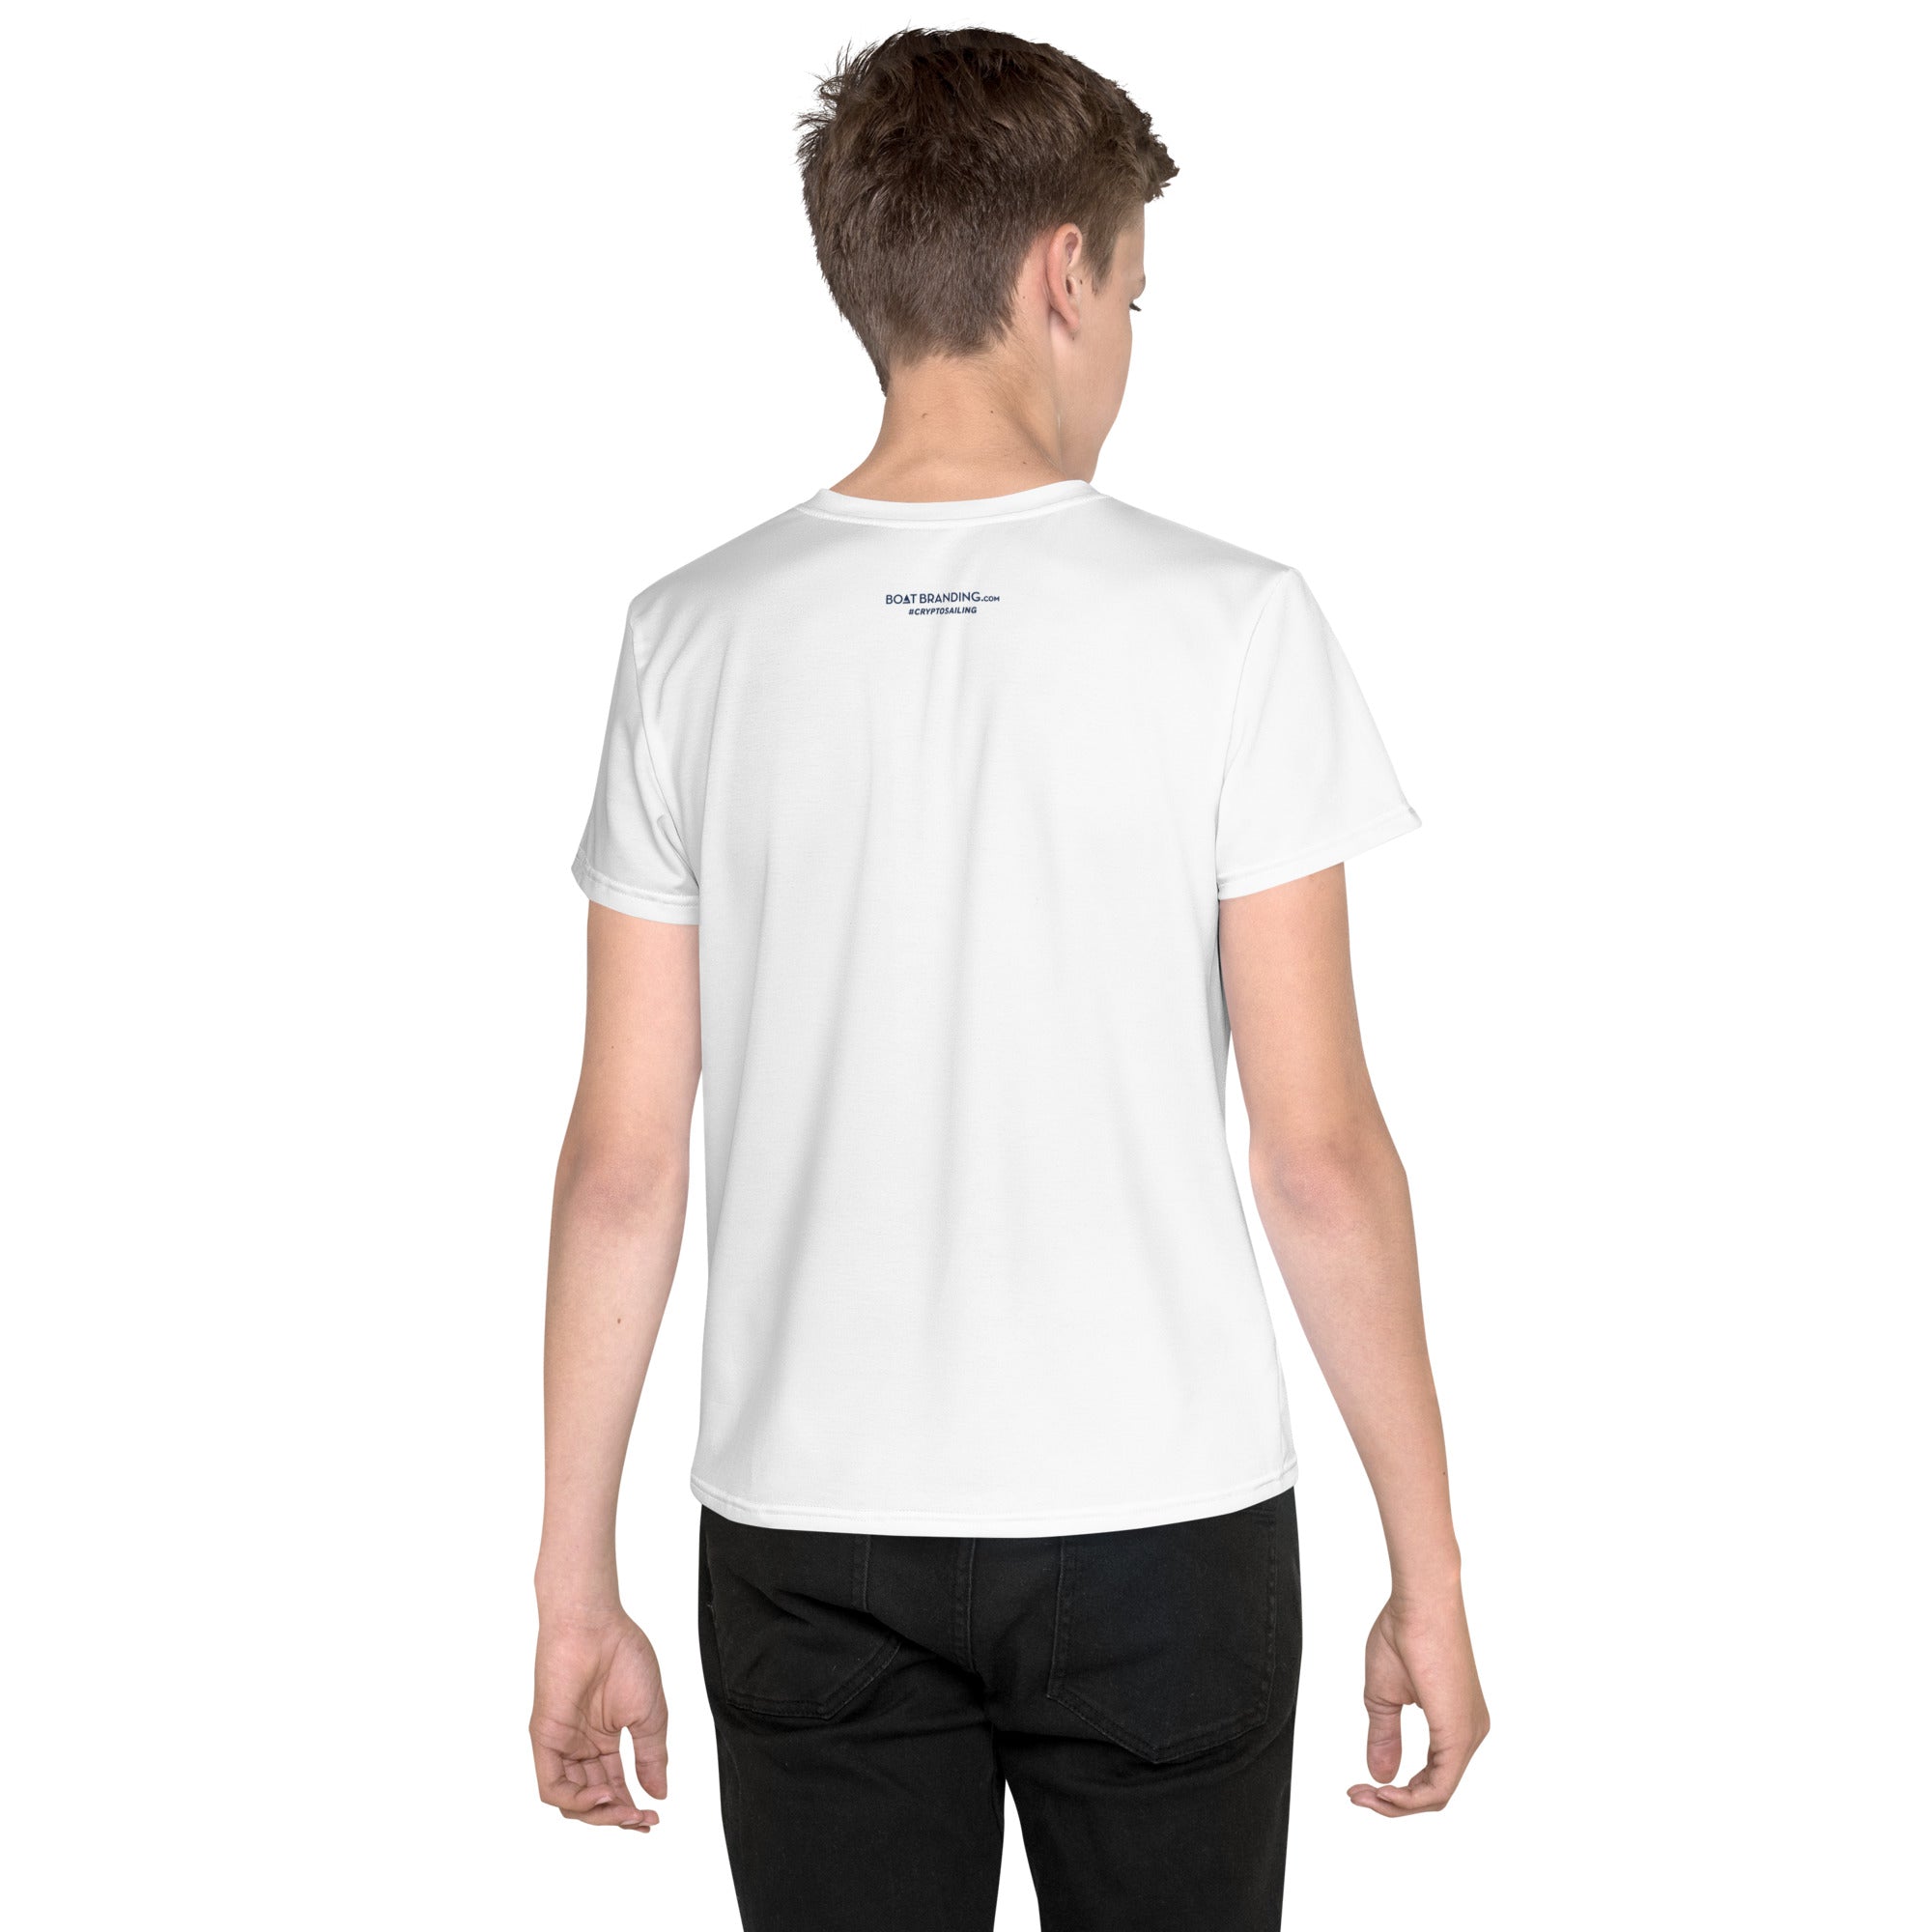 Youth crew neck t-shirt. (8T-20T) (Unisex)